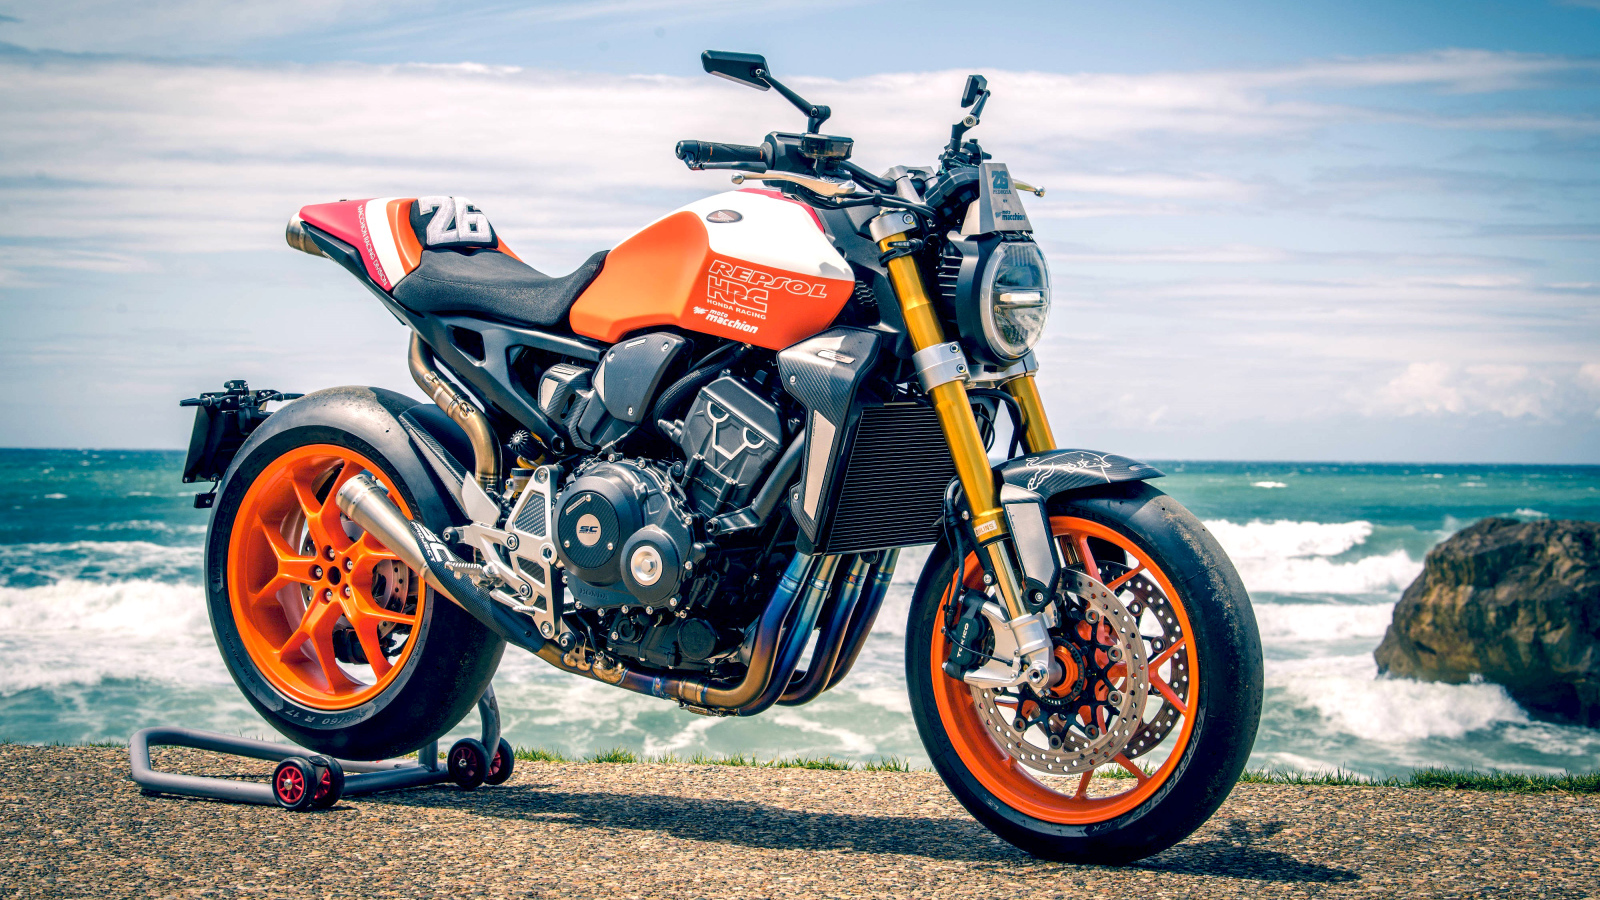 Большой мотоцикл Honda CB1000R 2019 года у моря